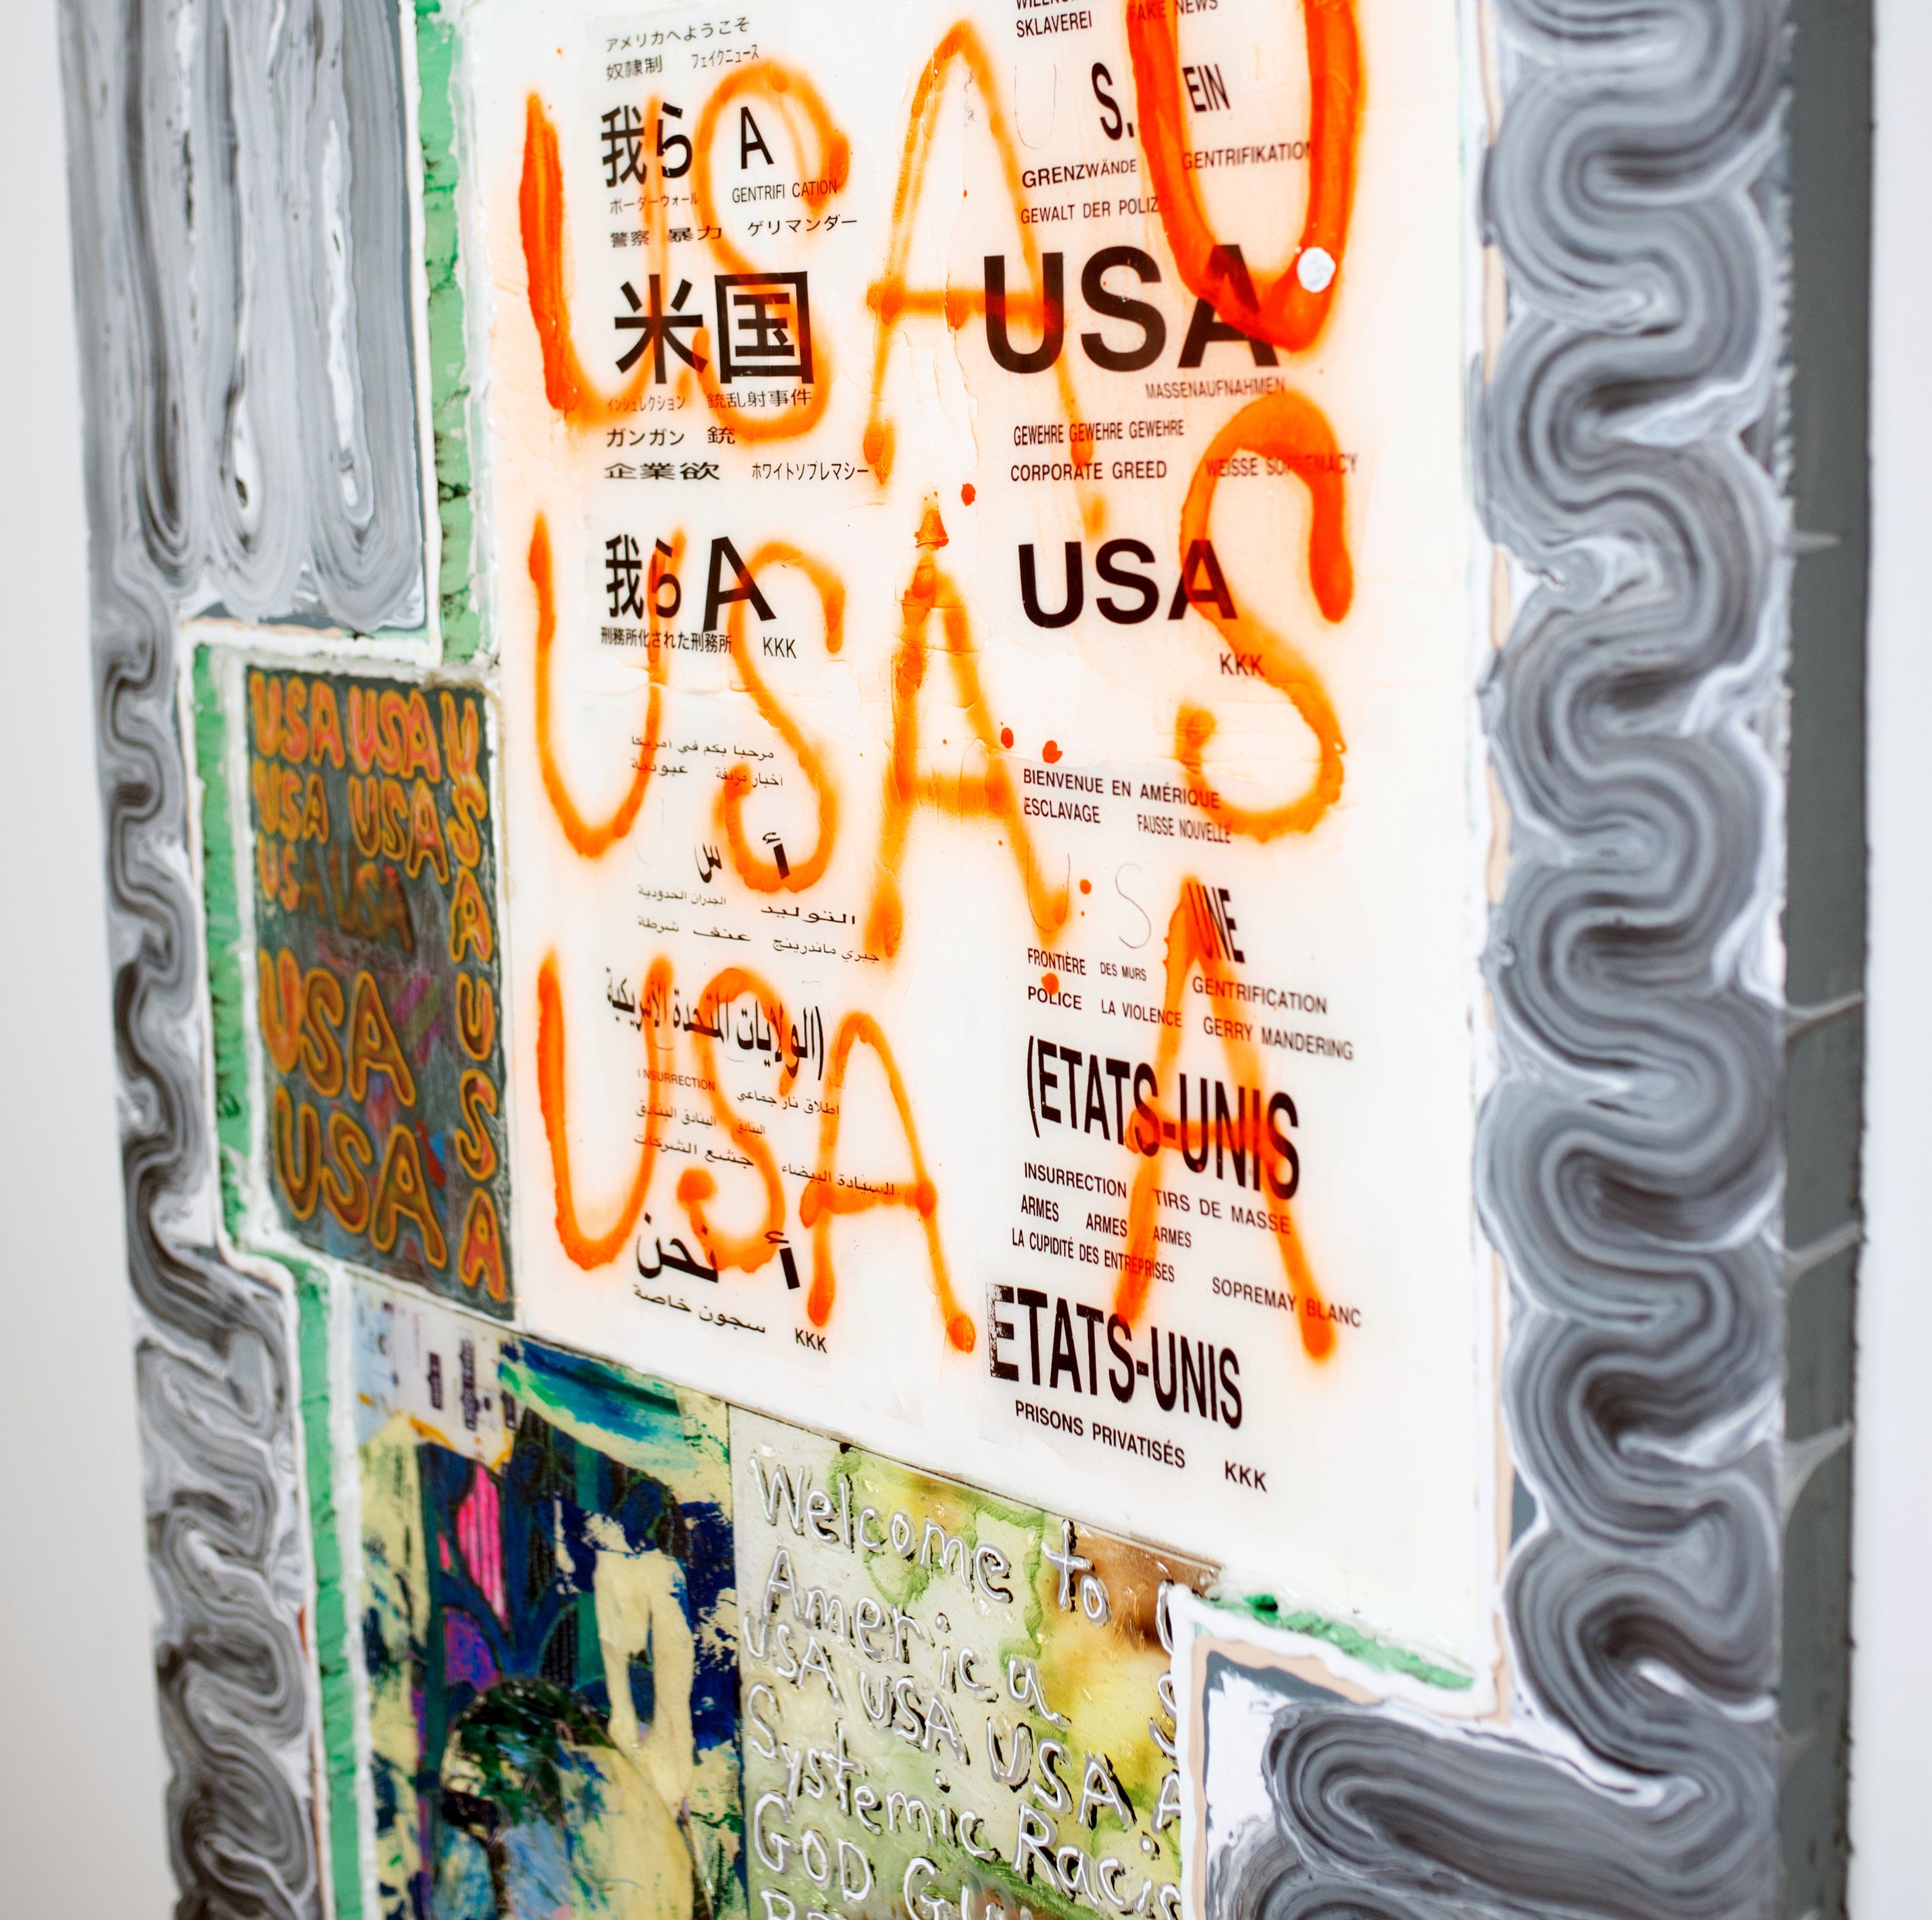    USA USA USA     Oil, acrylic, digital collage, spray paint, airbrush, caulk, rigid wrap, panels embedded in extruded polystyrene    48 x 40 in. 